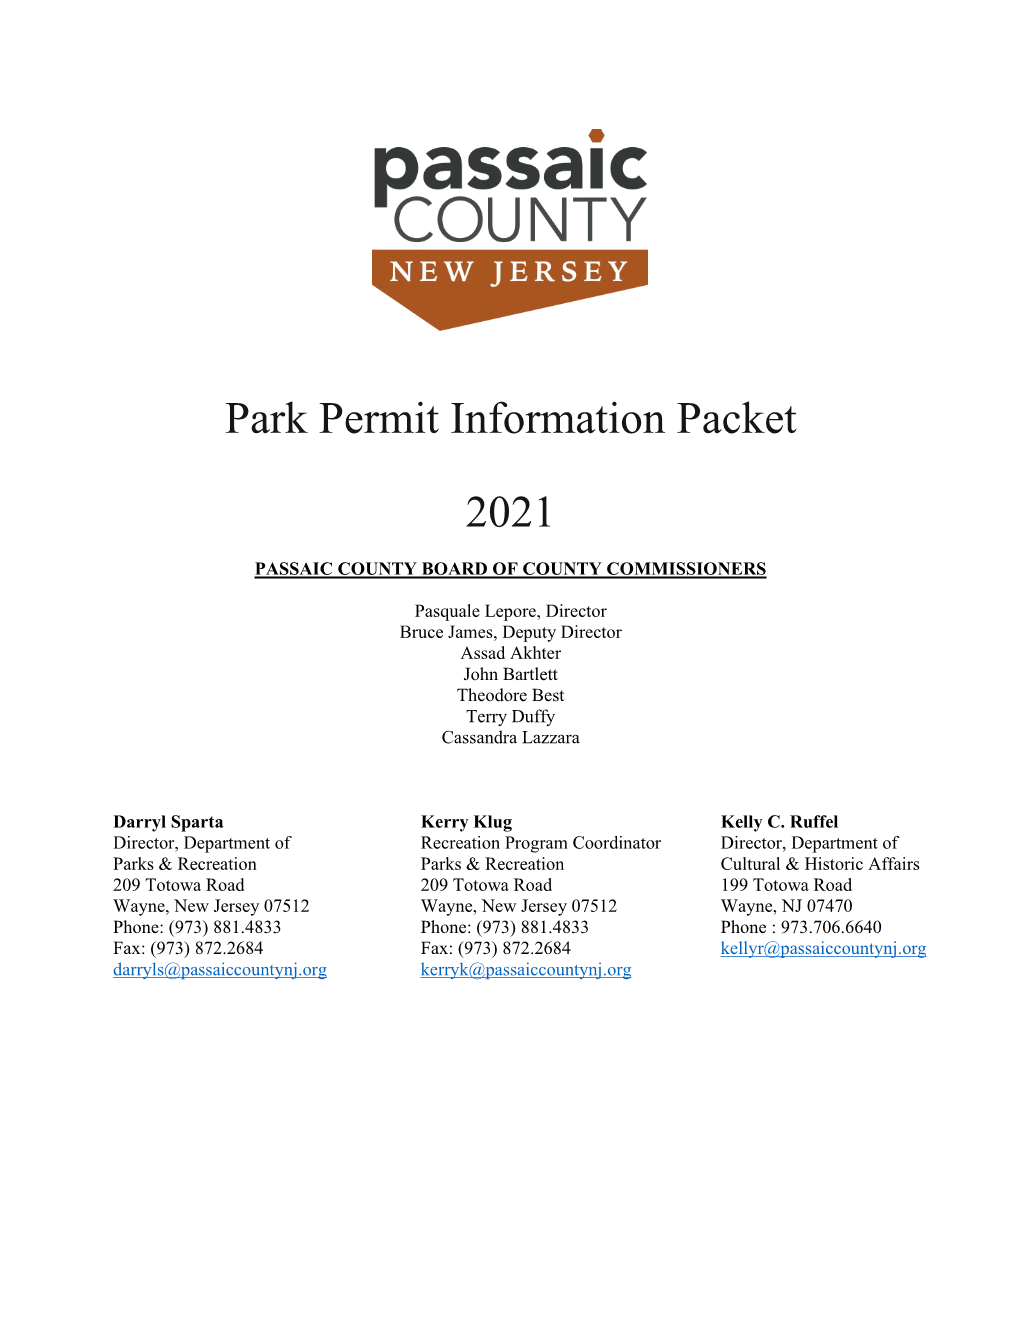 Park Permit Information Packet 2021